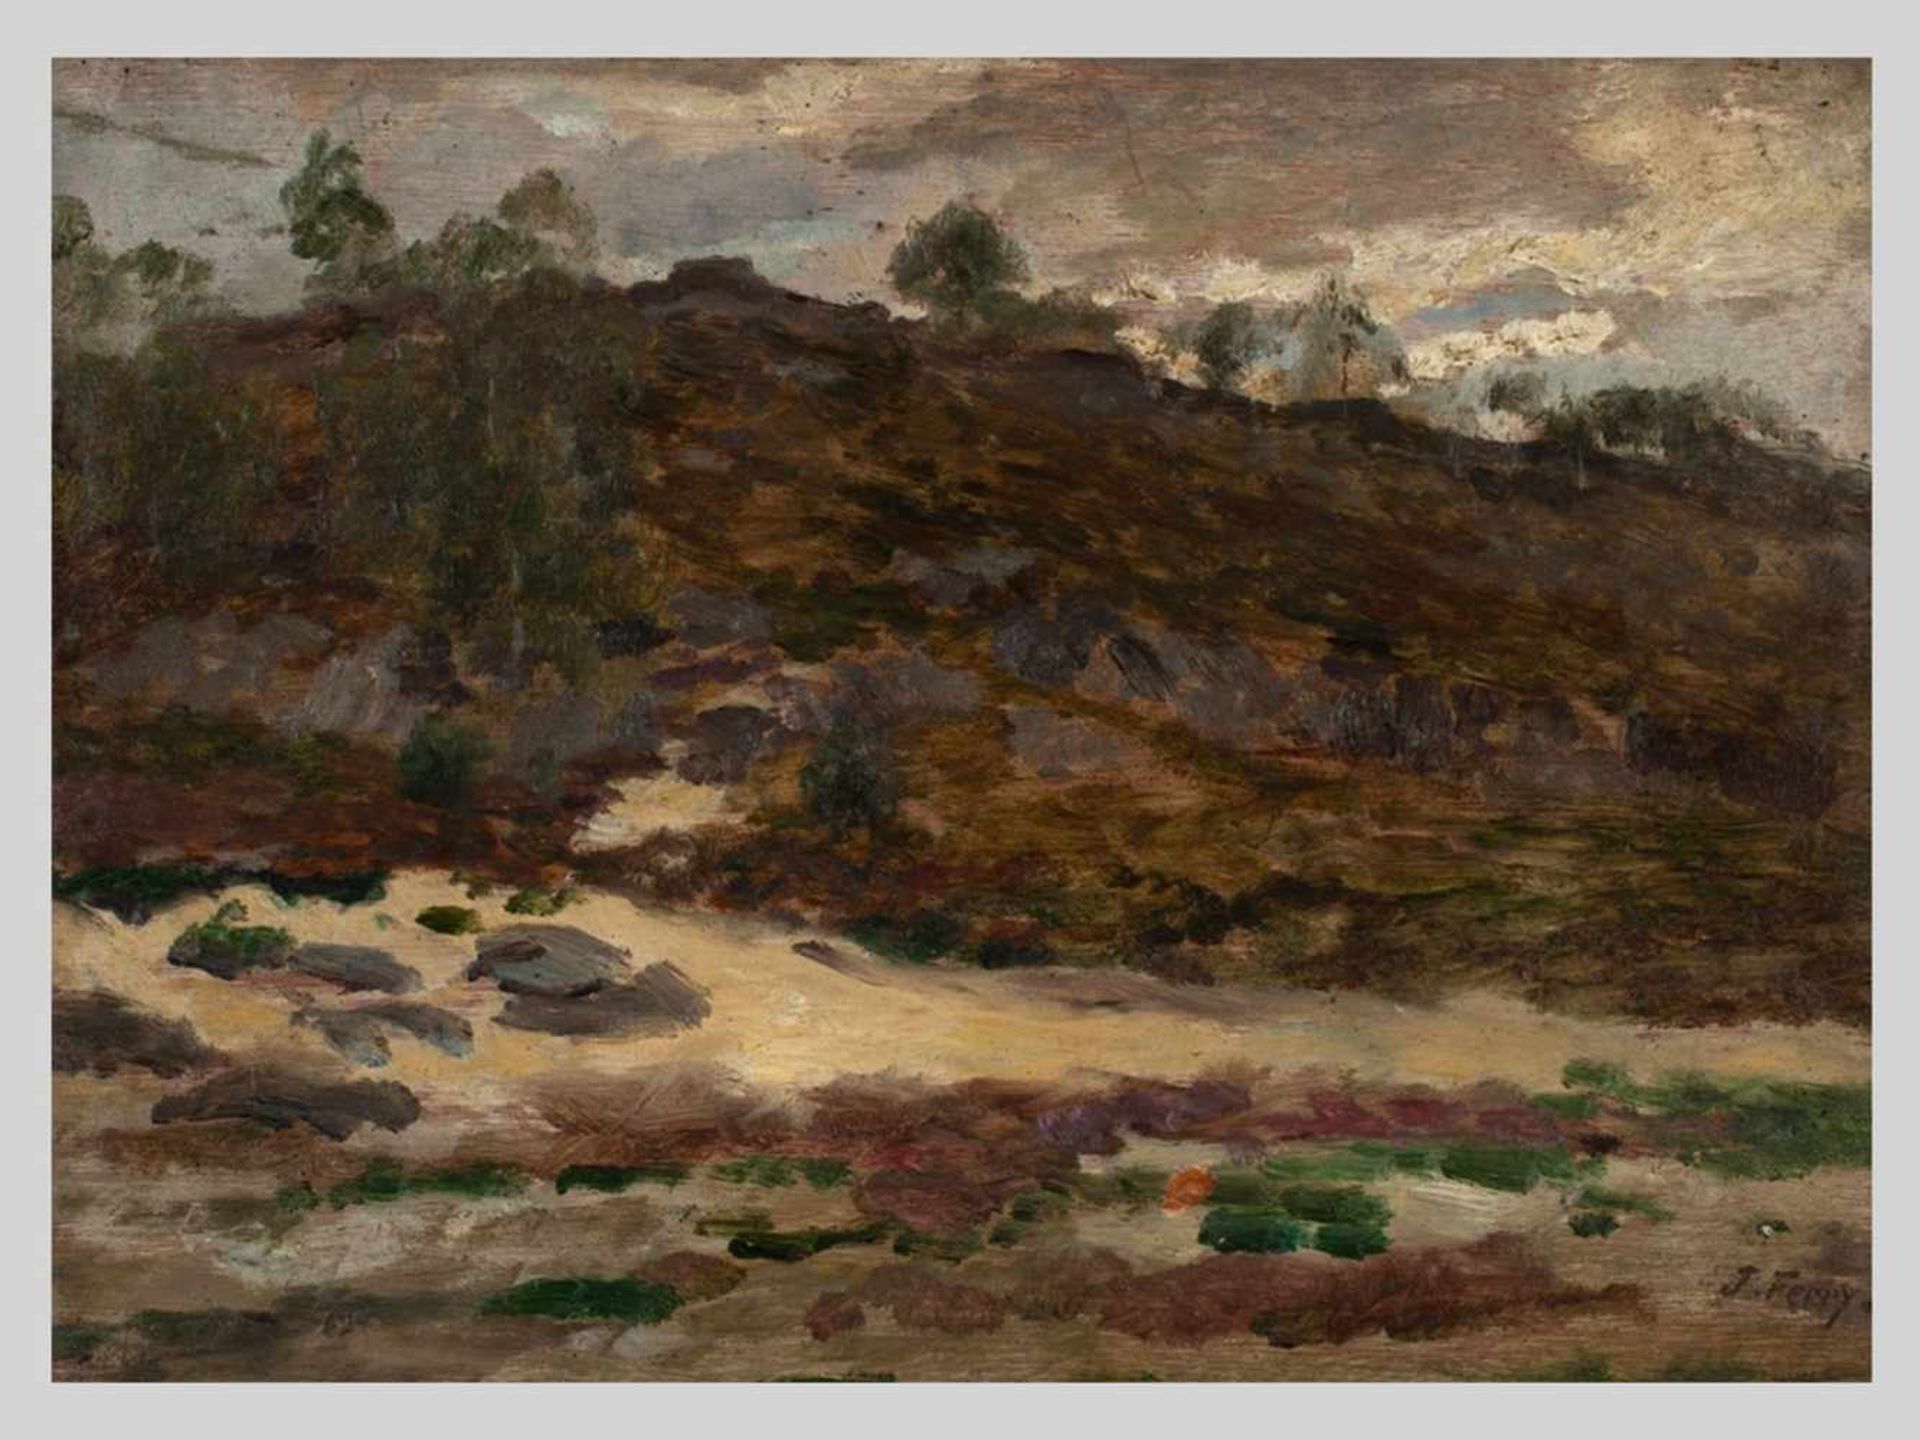 Jules-Jean Ferry, Oil Painting 'Mountain Creek', c. 1890